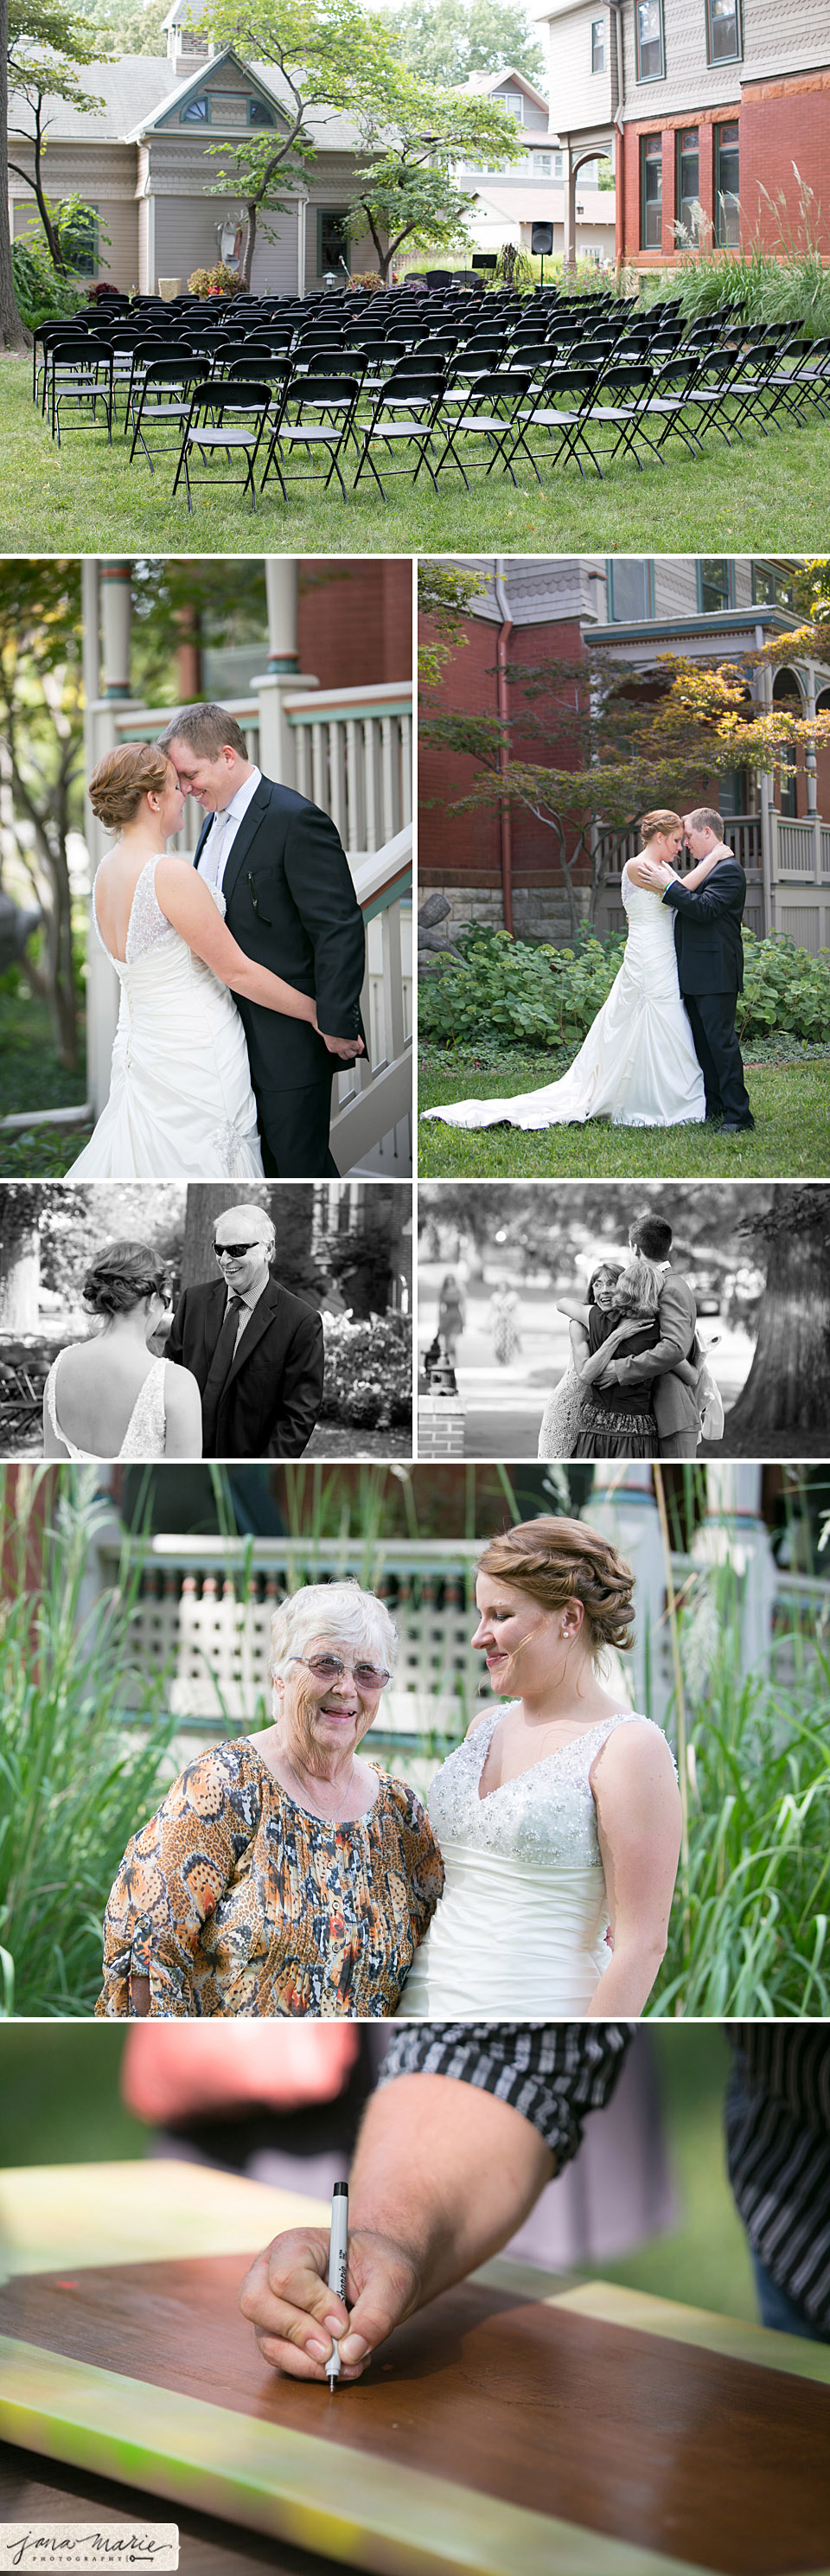 Jana Marie Photography, backyard weddings, art enthusiasts, candids, black and white photography